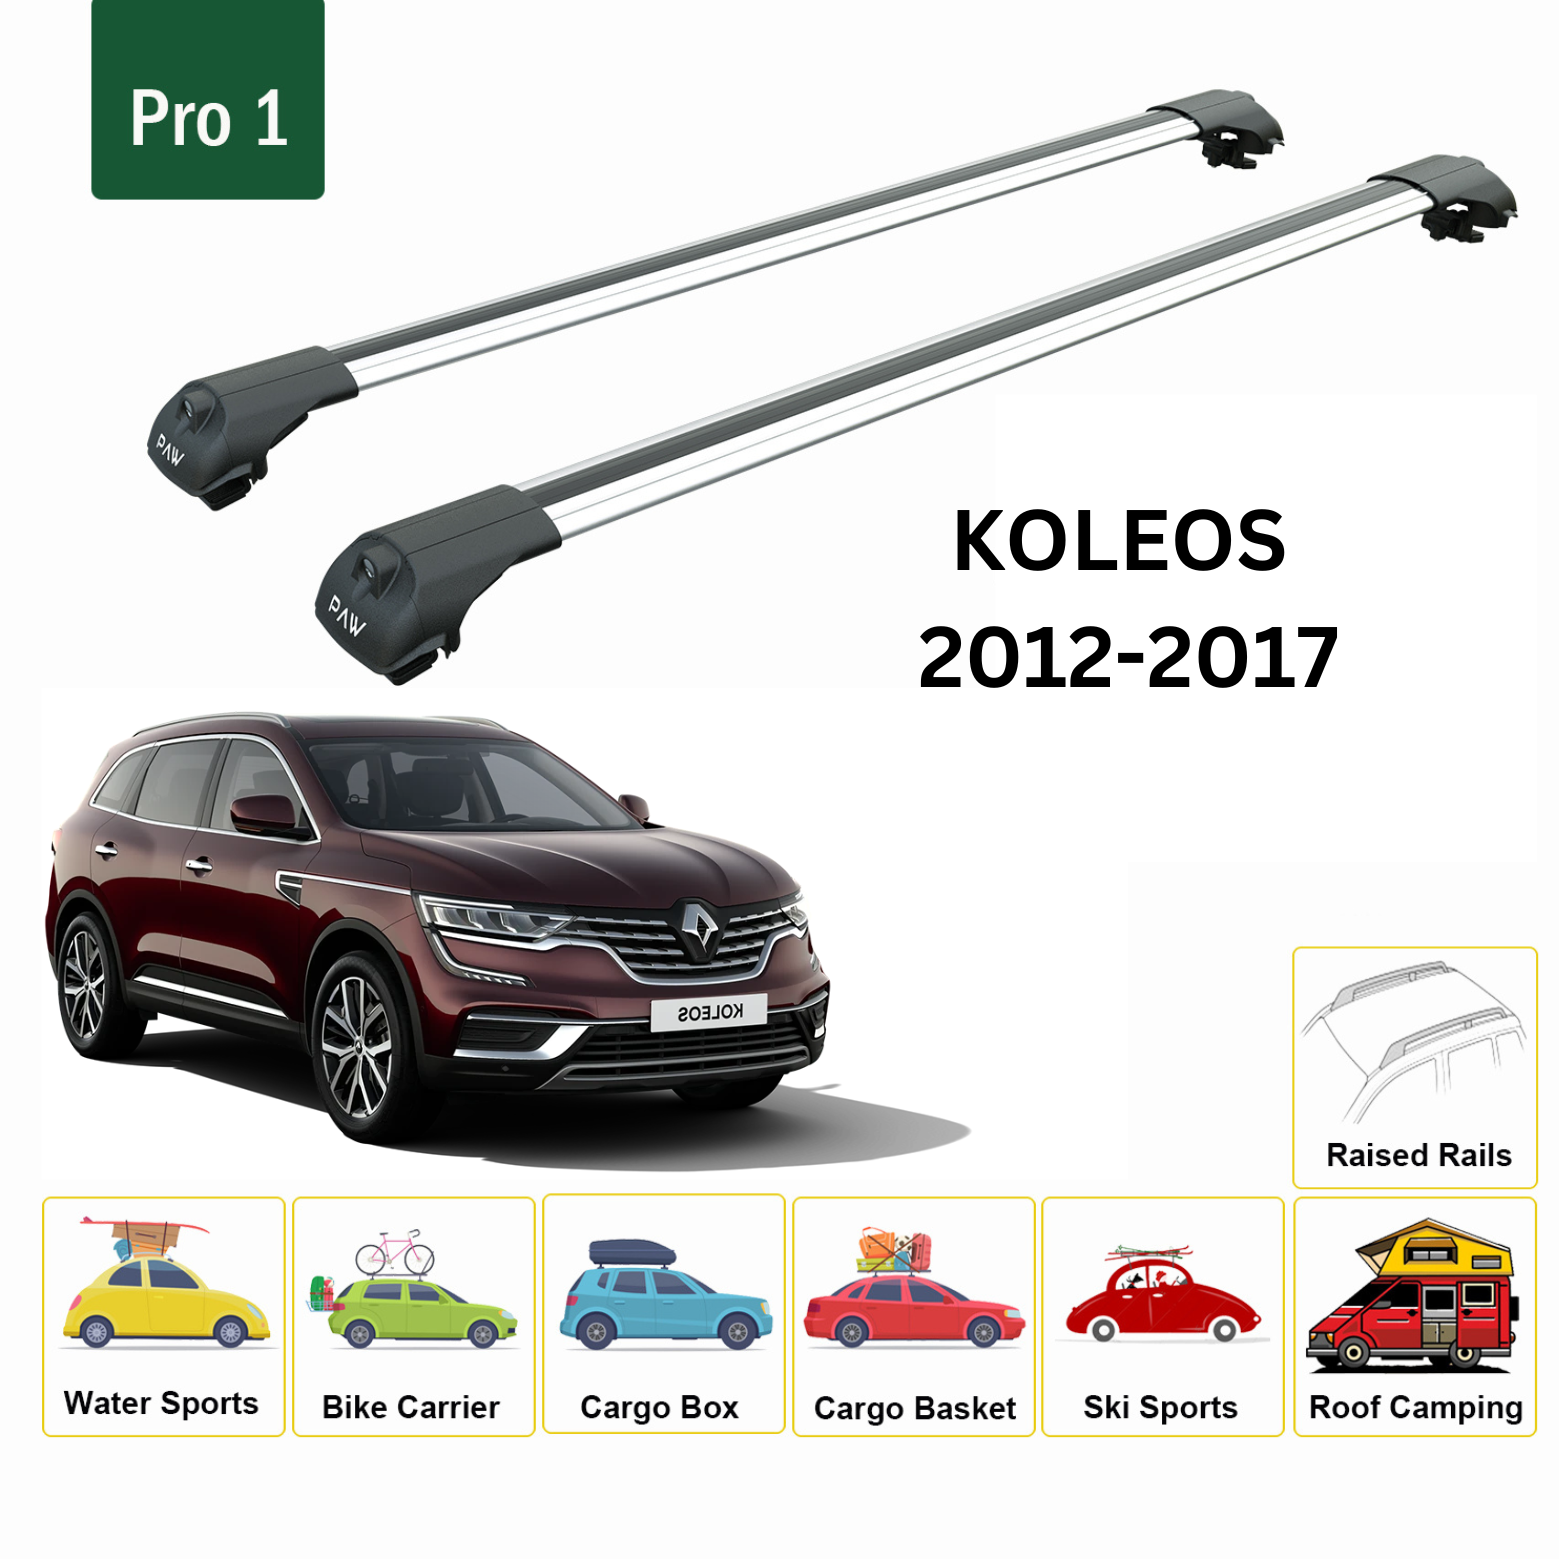 For Renault Koleos 2012-2017 Roof Rack System, Aluminium Cross Bar, Metal Bracket, Normal Roof, Silver